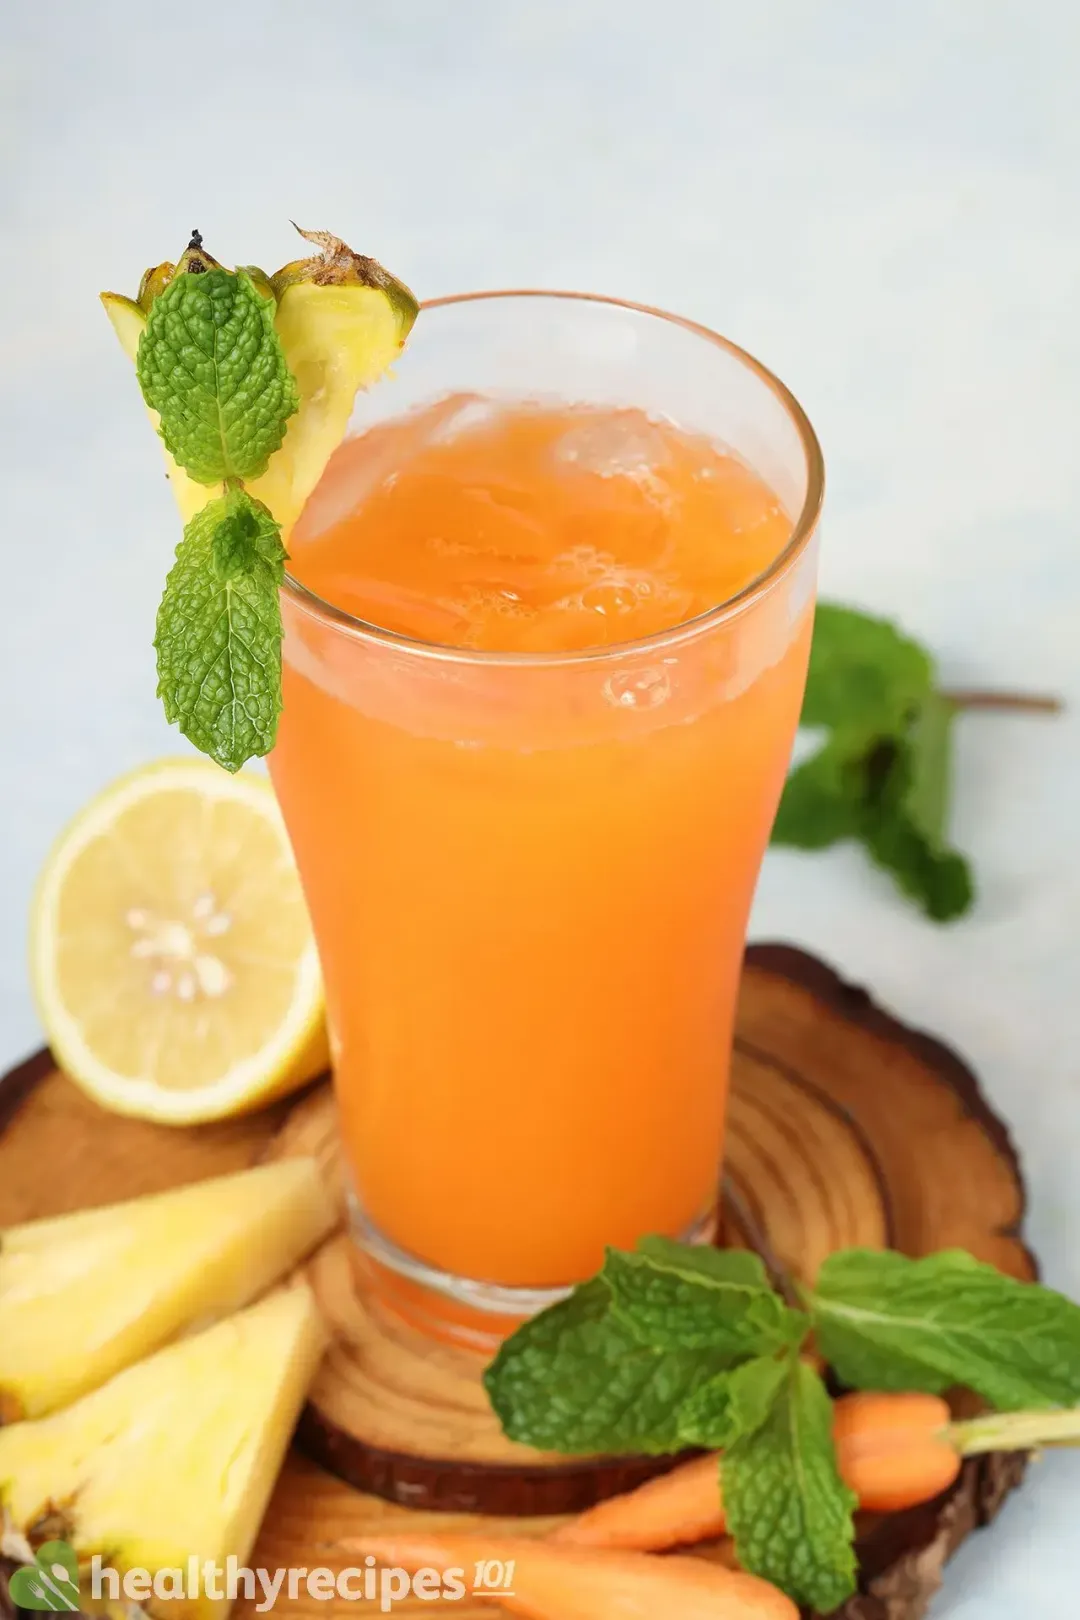 Is Pineapple Carrot Juice Healthy